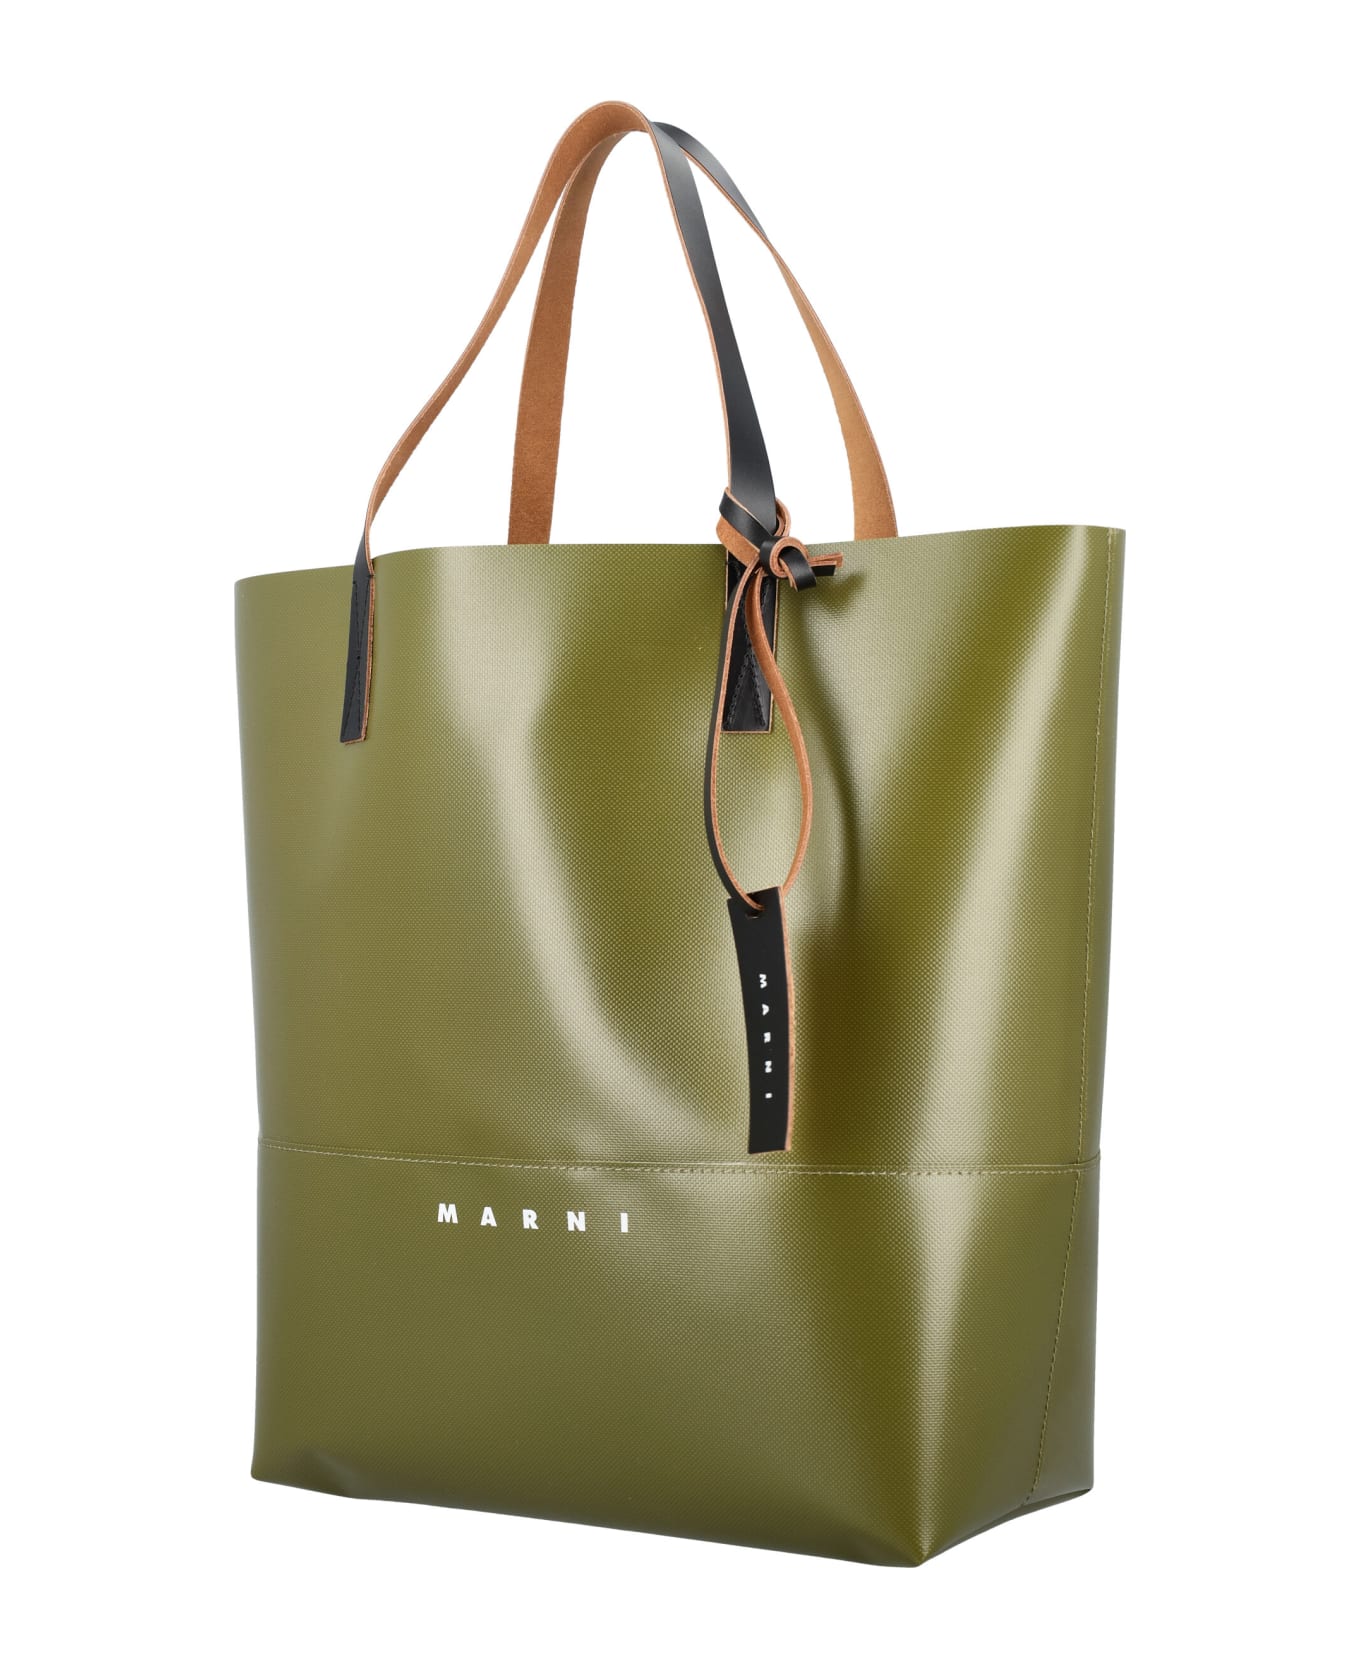 Marni Tribeca Shopping Bag - MILITARY GREEN